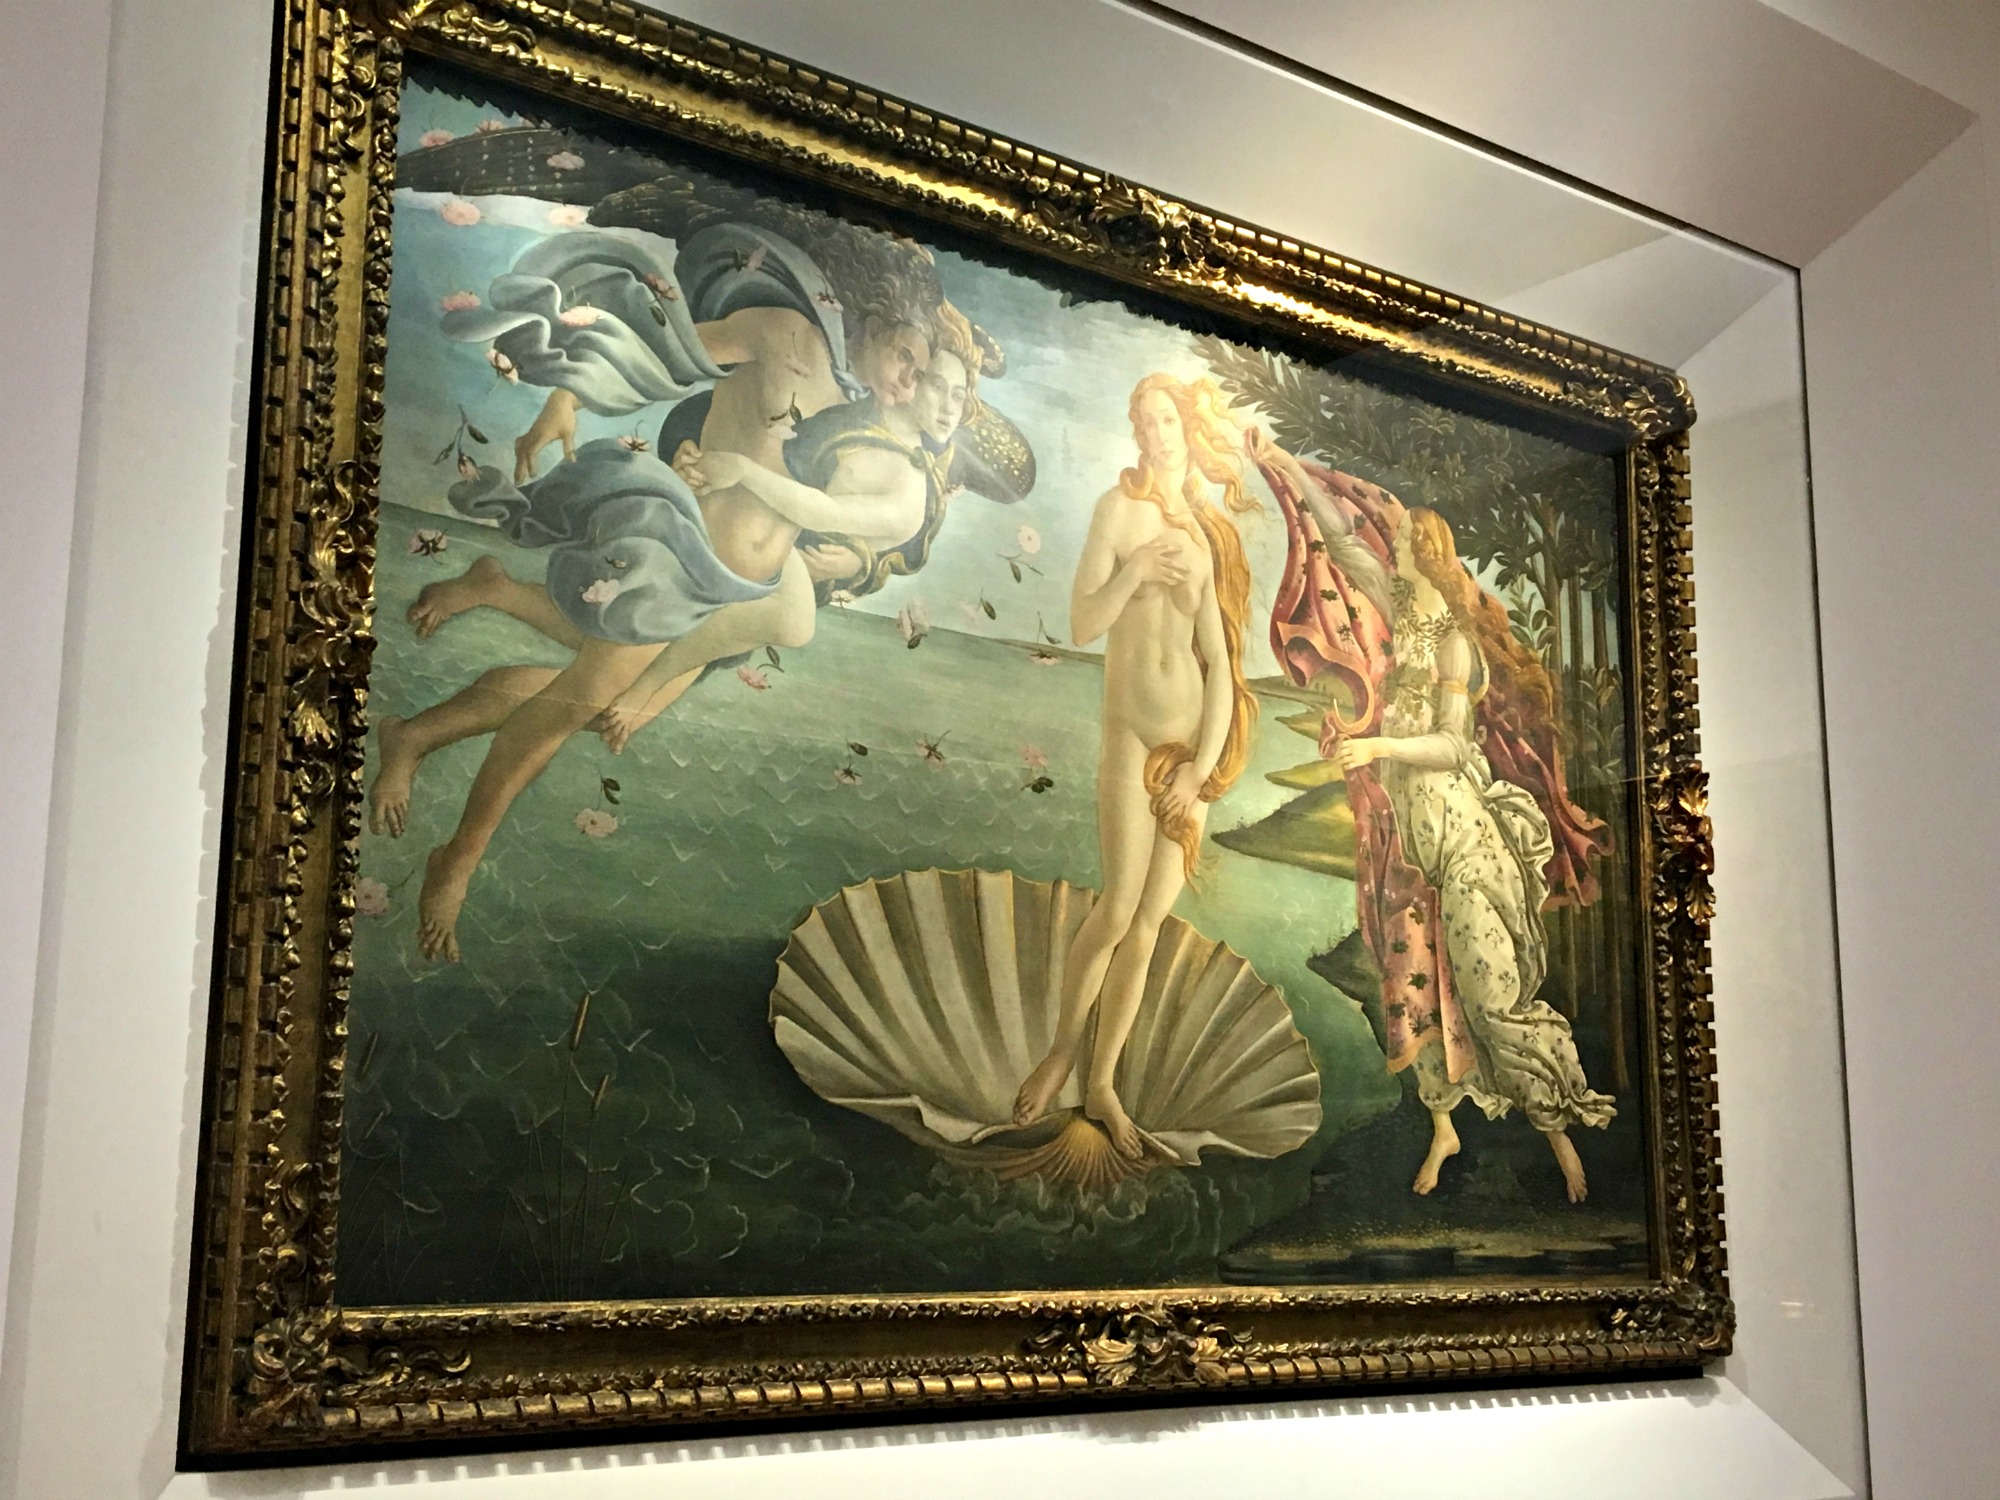 Sandro Botticelli Birth of Venus, Uffizi galley, Florence, family tour